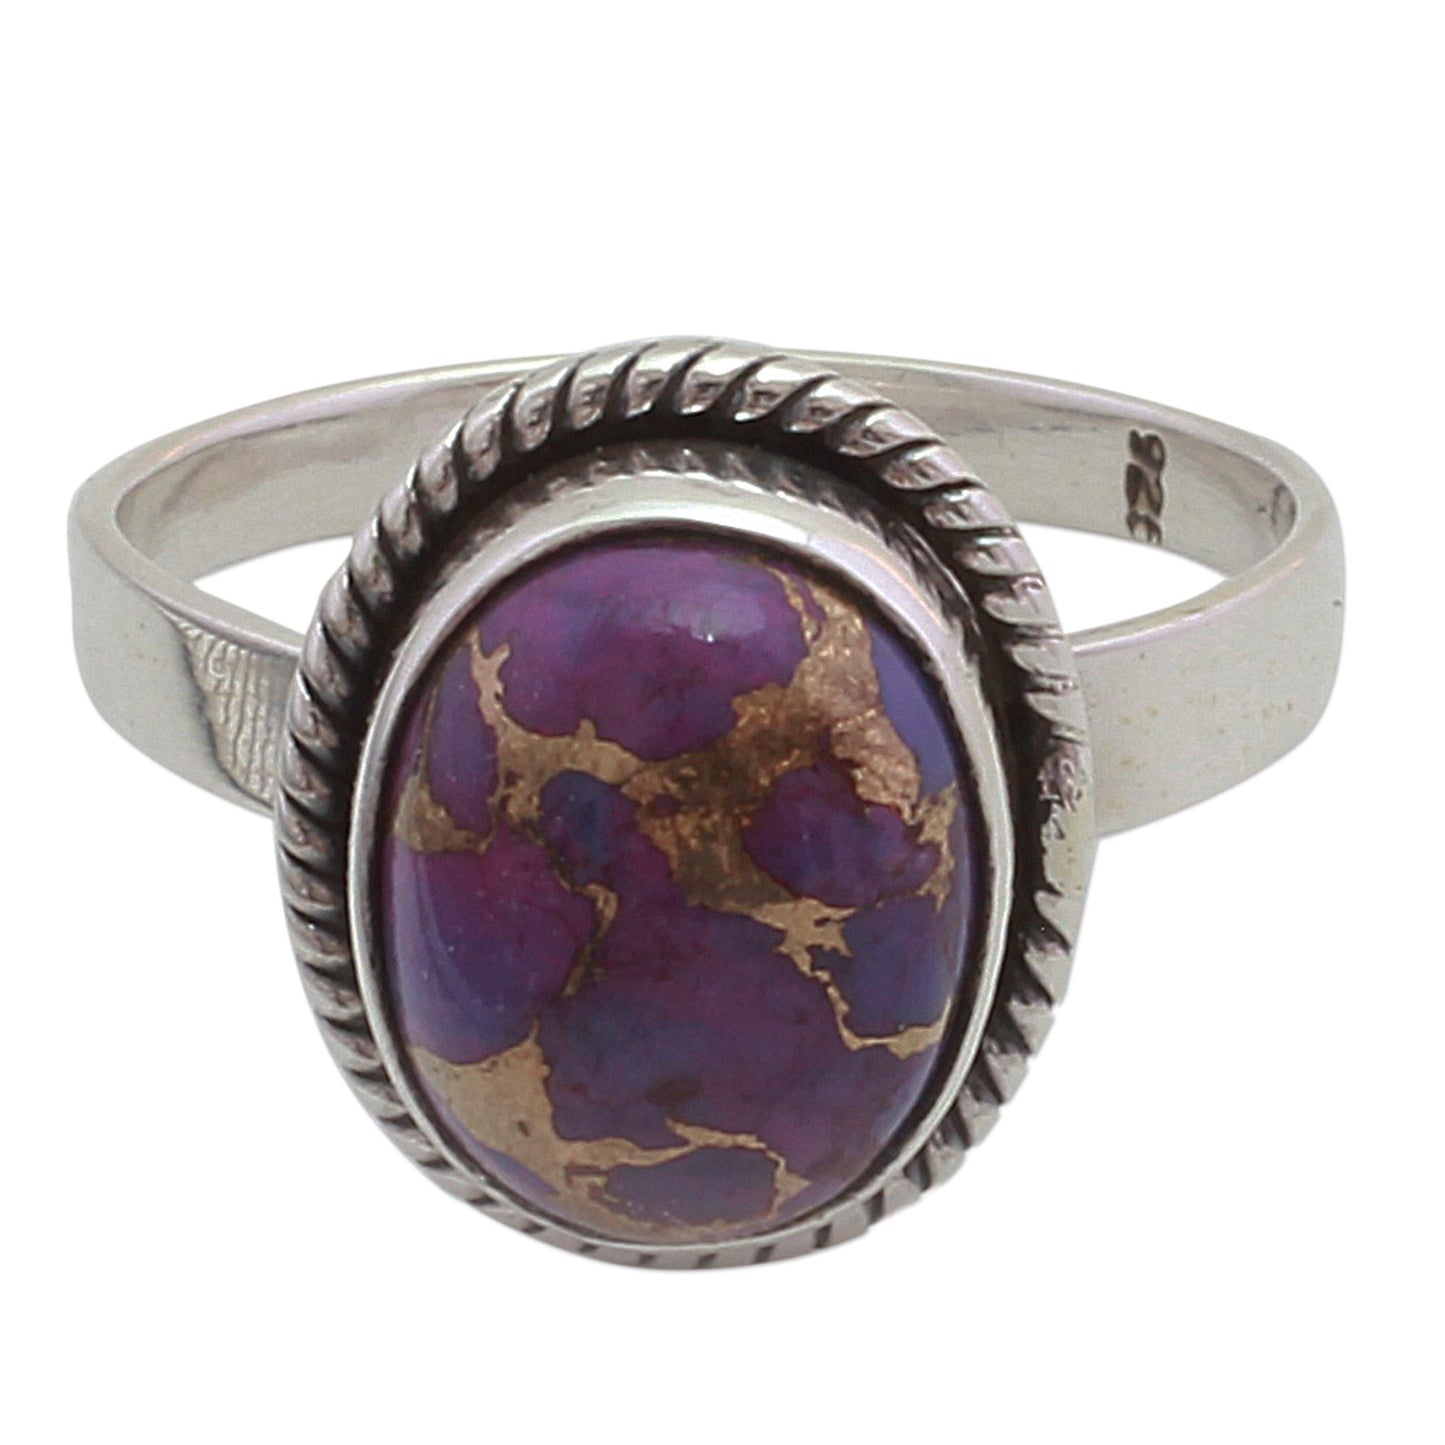 Delightful Purple Composite Turquoise Ring